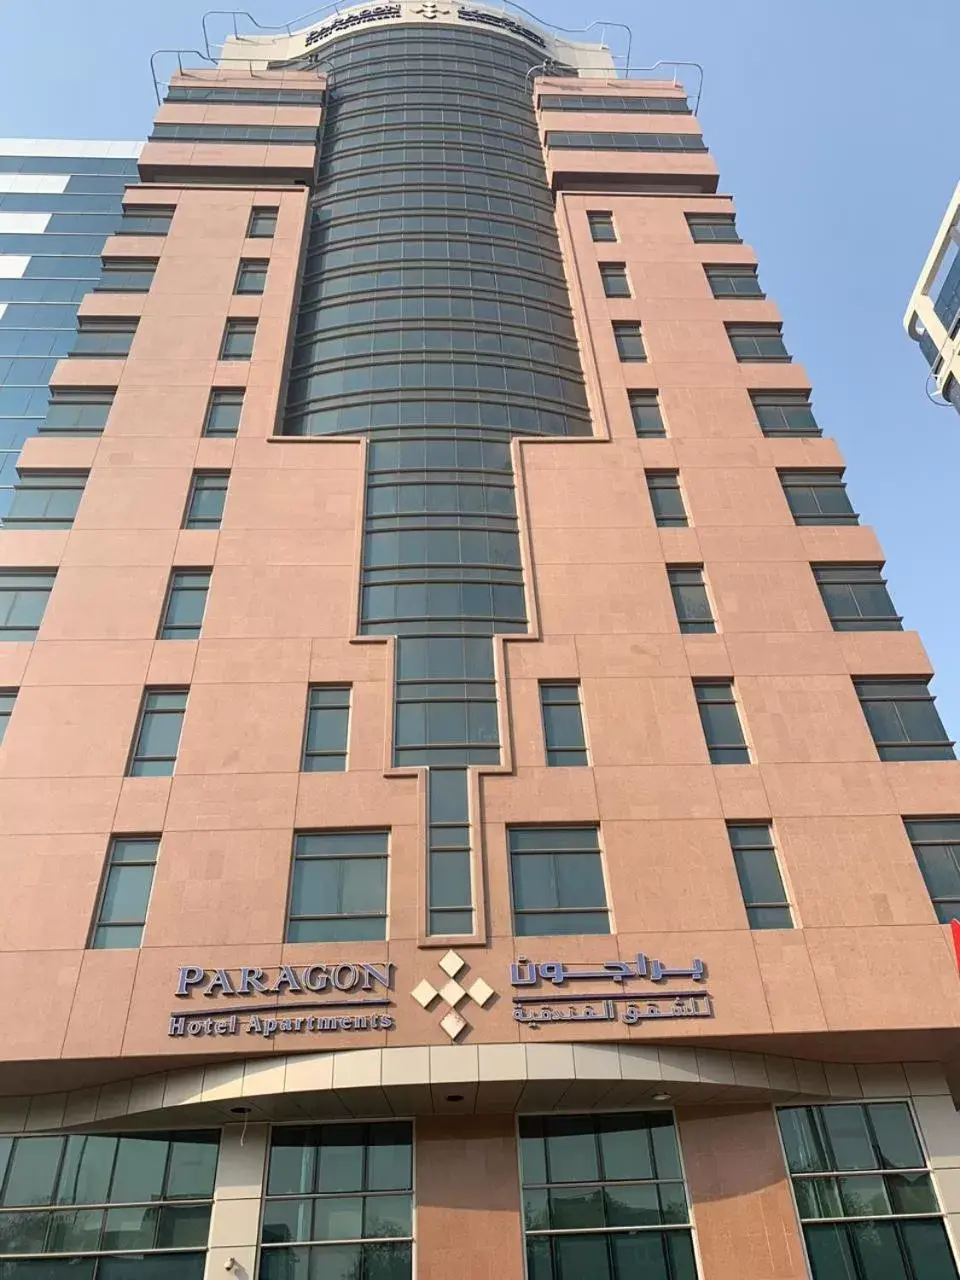 Facade/entrance, Property Building in Paragon Hotel Apartments